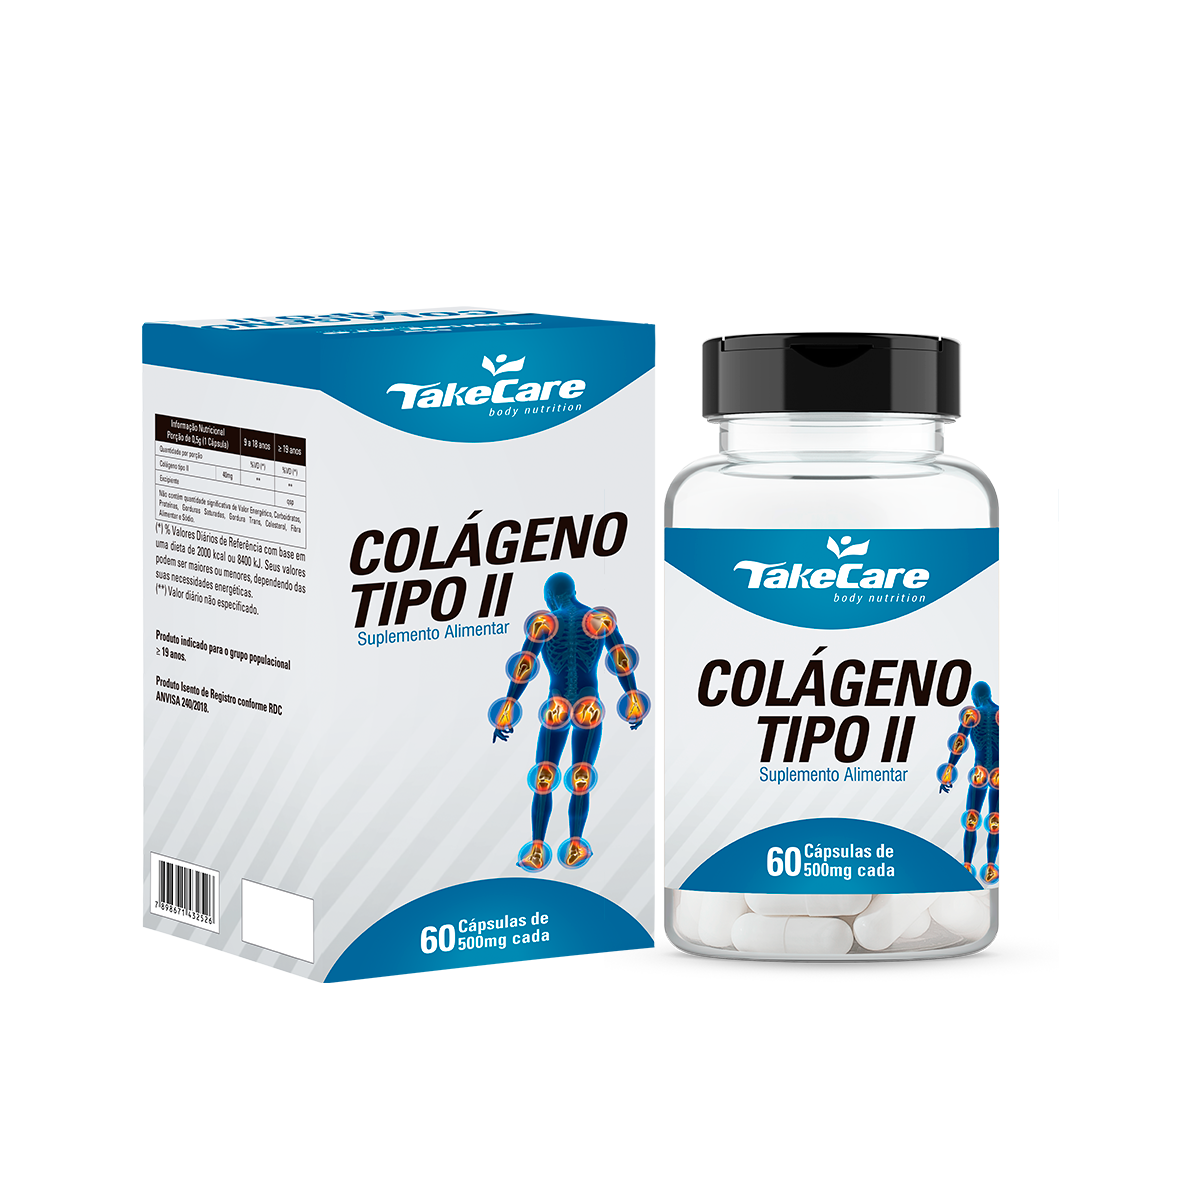 TYPE 2 COLLAGEN – 60 CAPSULES 500 mg